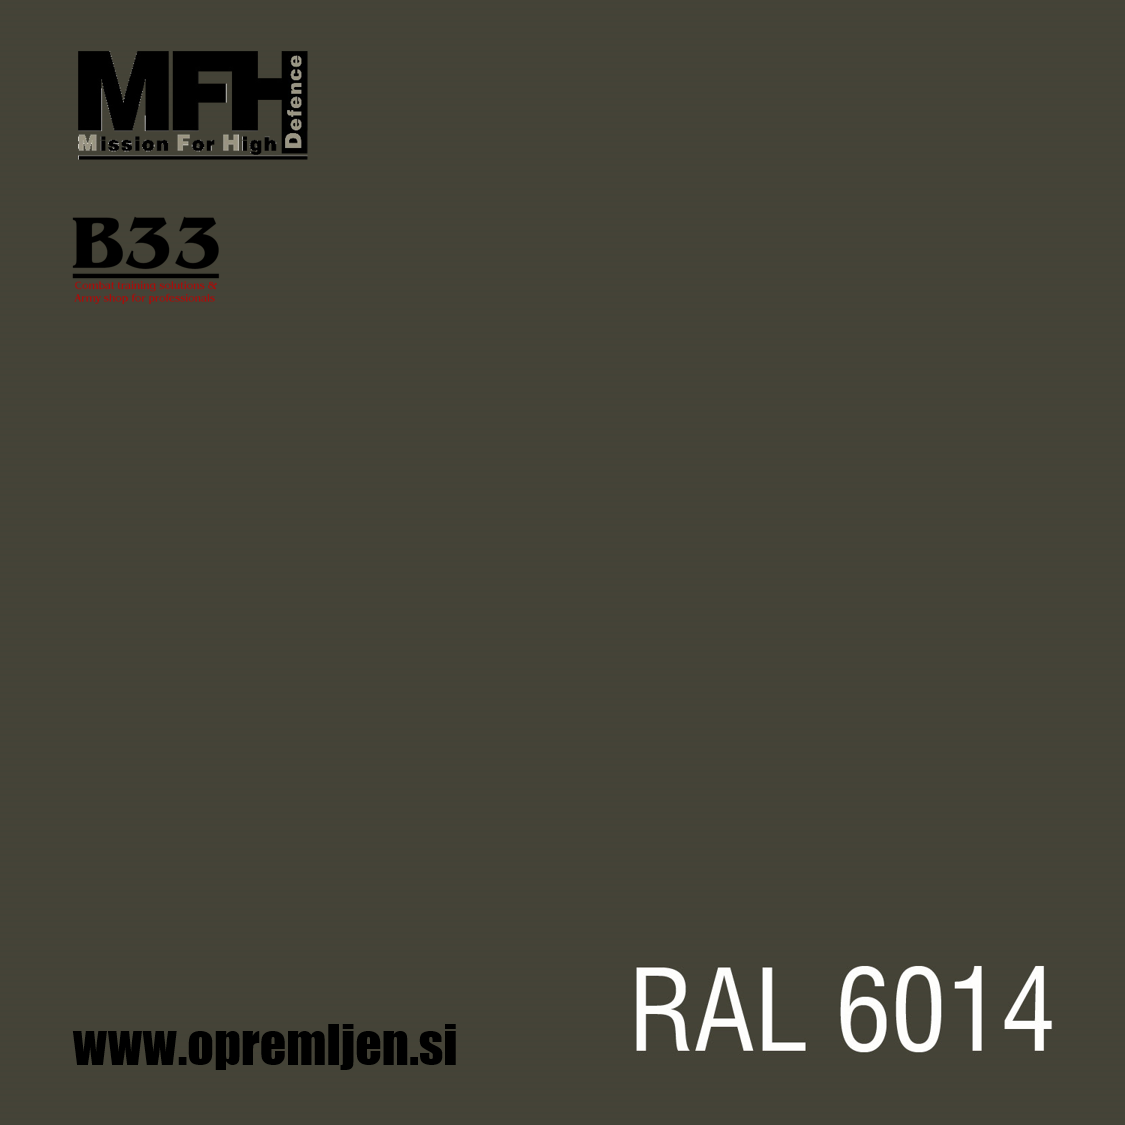 Vojaška barva sprej olivna OLIV DRAB RAL6014 400ml MFH - Max Fuchs by B33 army shop at www.opremljen.s